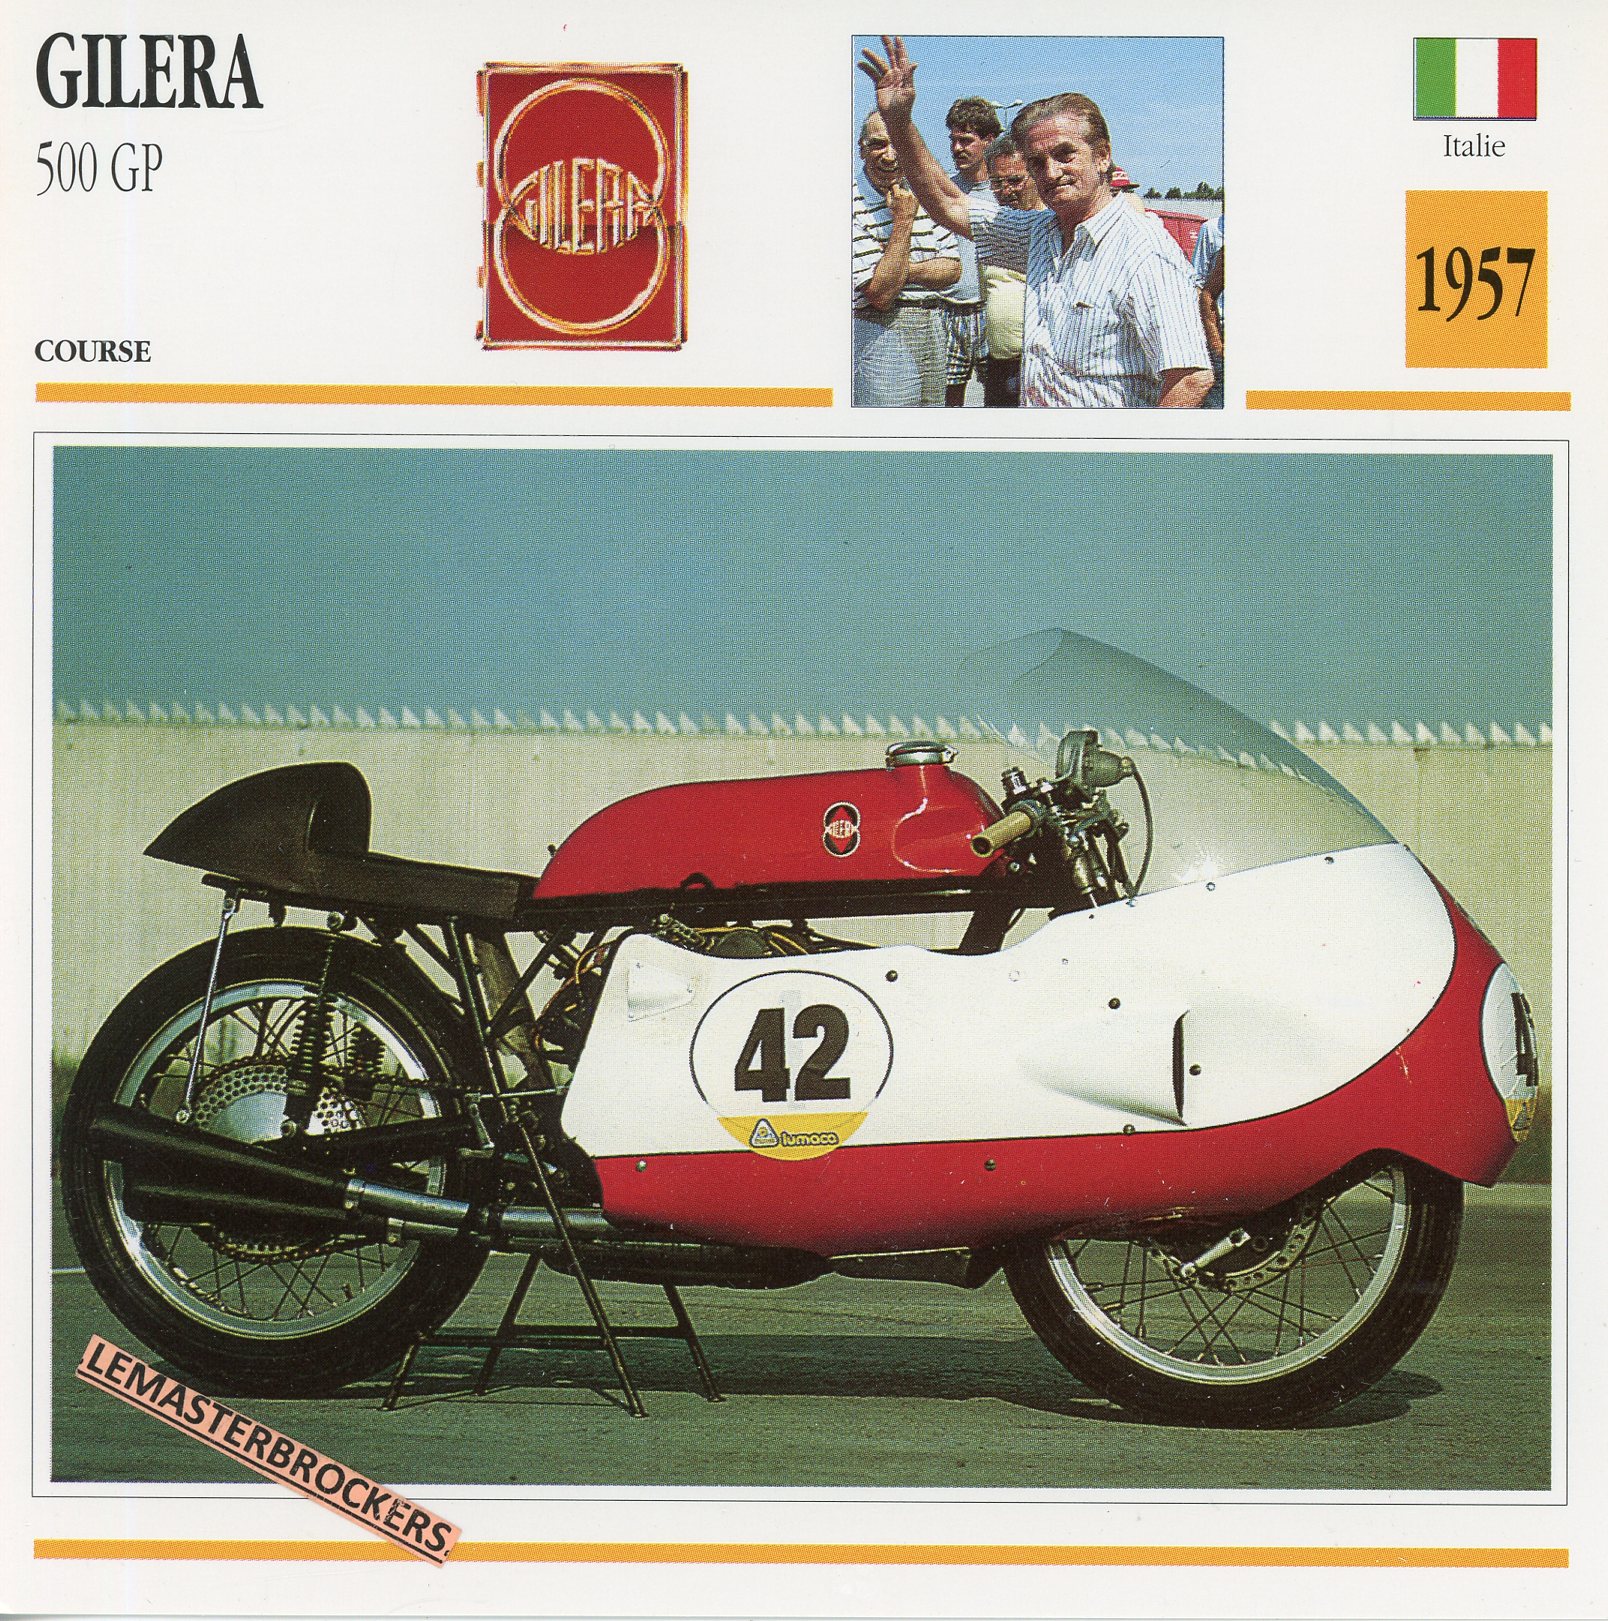 GILERA-500-GP-1957-FICHE-MOTO-MOTORCYCLE-CARDS-ATLAS-LEMASTERBROCKERS